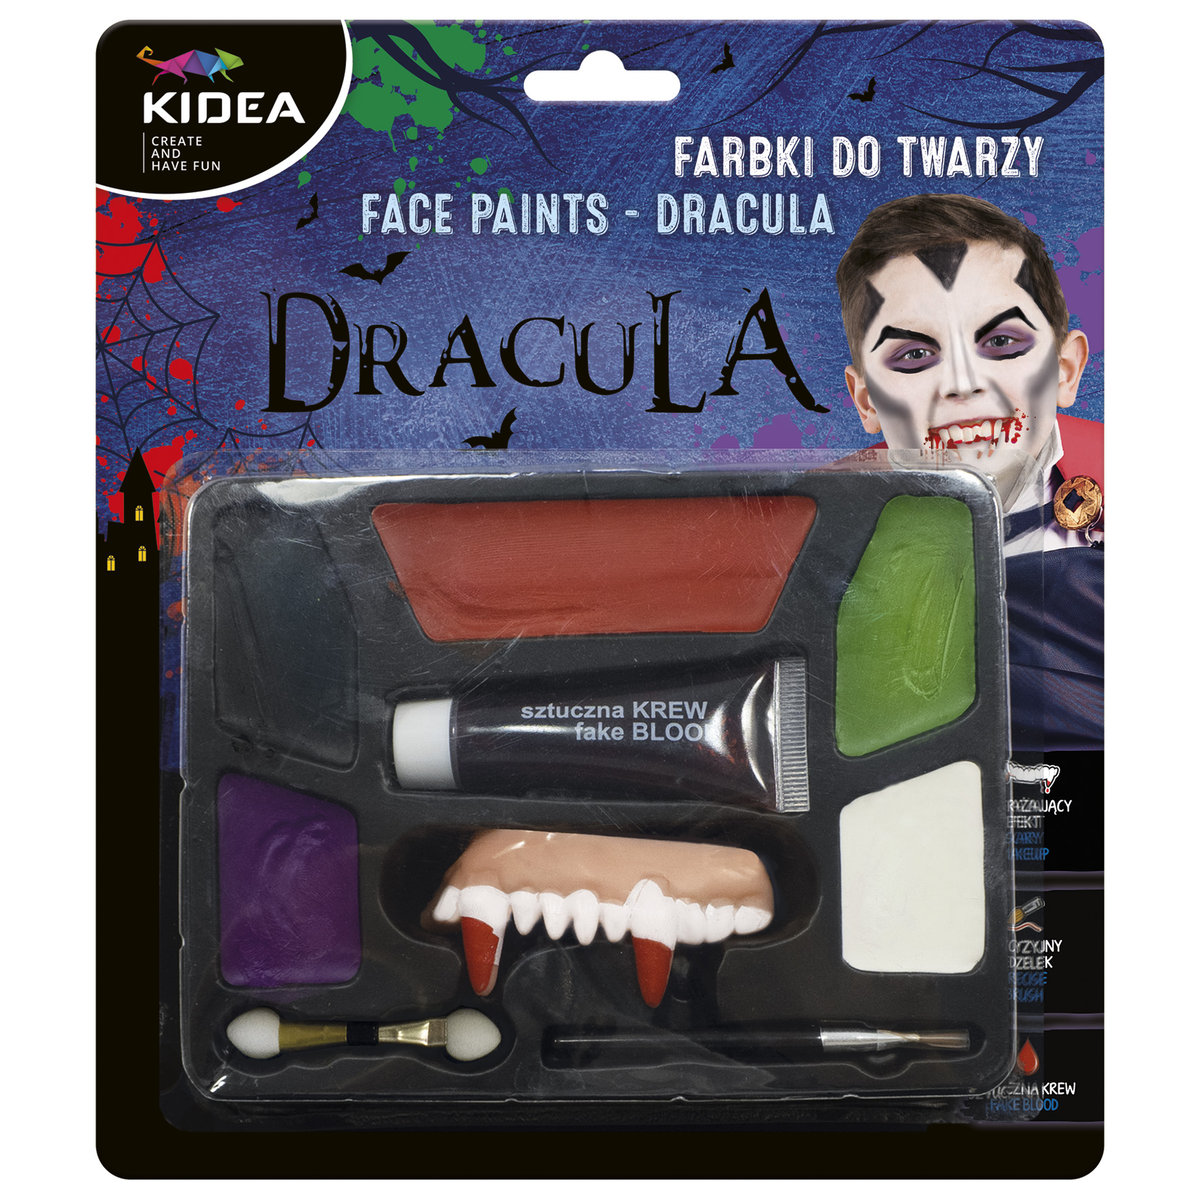 KIDEA Farbki do twarzy zestaw Dracula Kidea FDTZDKA_20211003172719